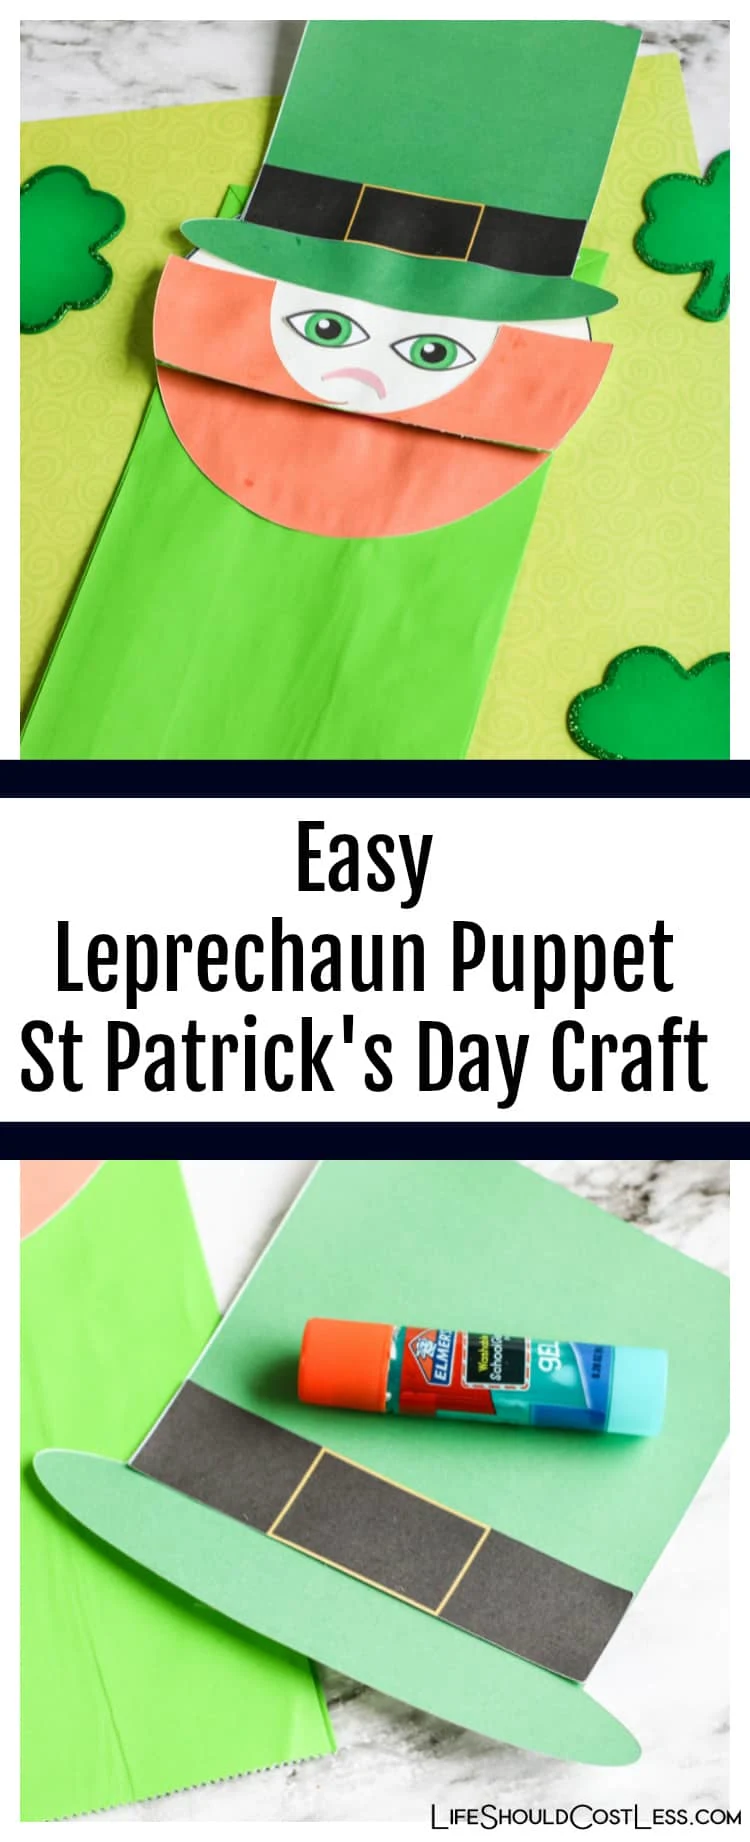 Easy Leprechaun Puppet St Patrick's Day Craft. Paper Bag lifeshouldcostless.com